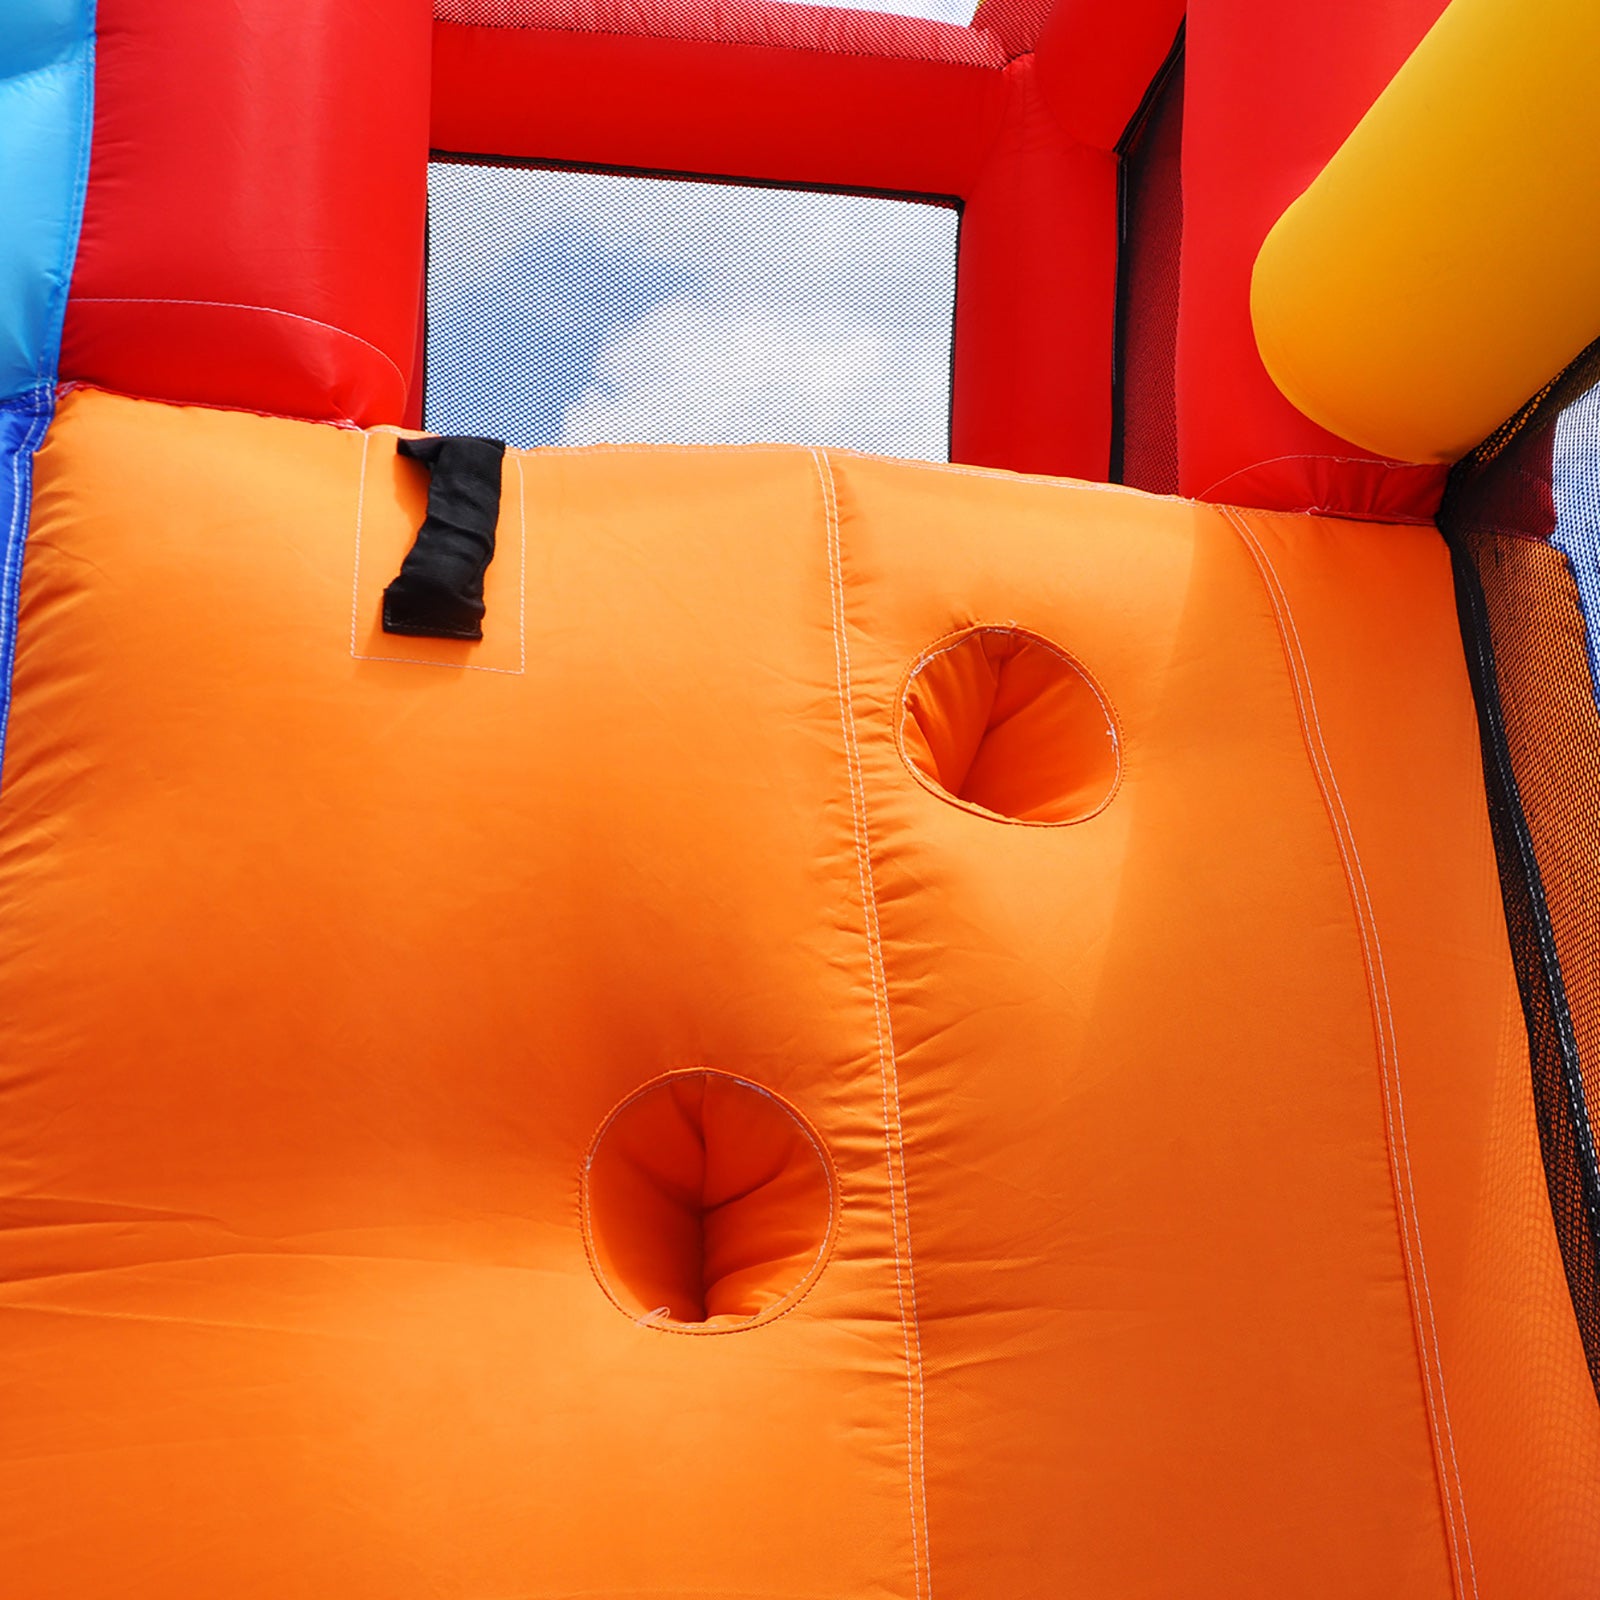 #1106 Inflatable Water Slide Bounce House,Slide Bouncer Castle Playhouse w/Splash Pool,Jump Area, Climbing Wall,Basketball Hoop,450W Air Blower for Kids Backyard Indoor Outdoor Use,Free Water Gun